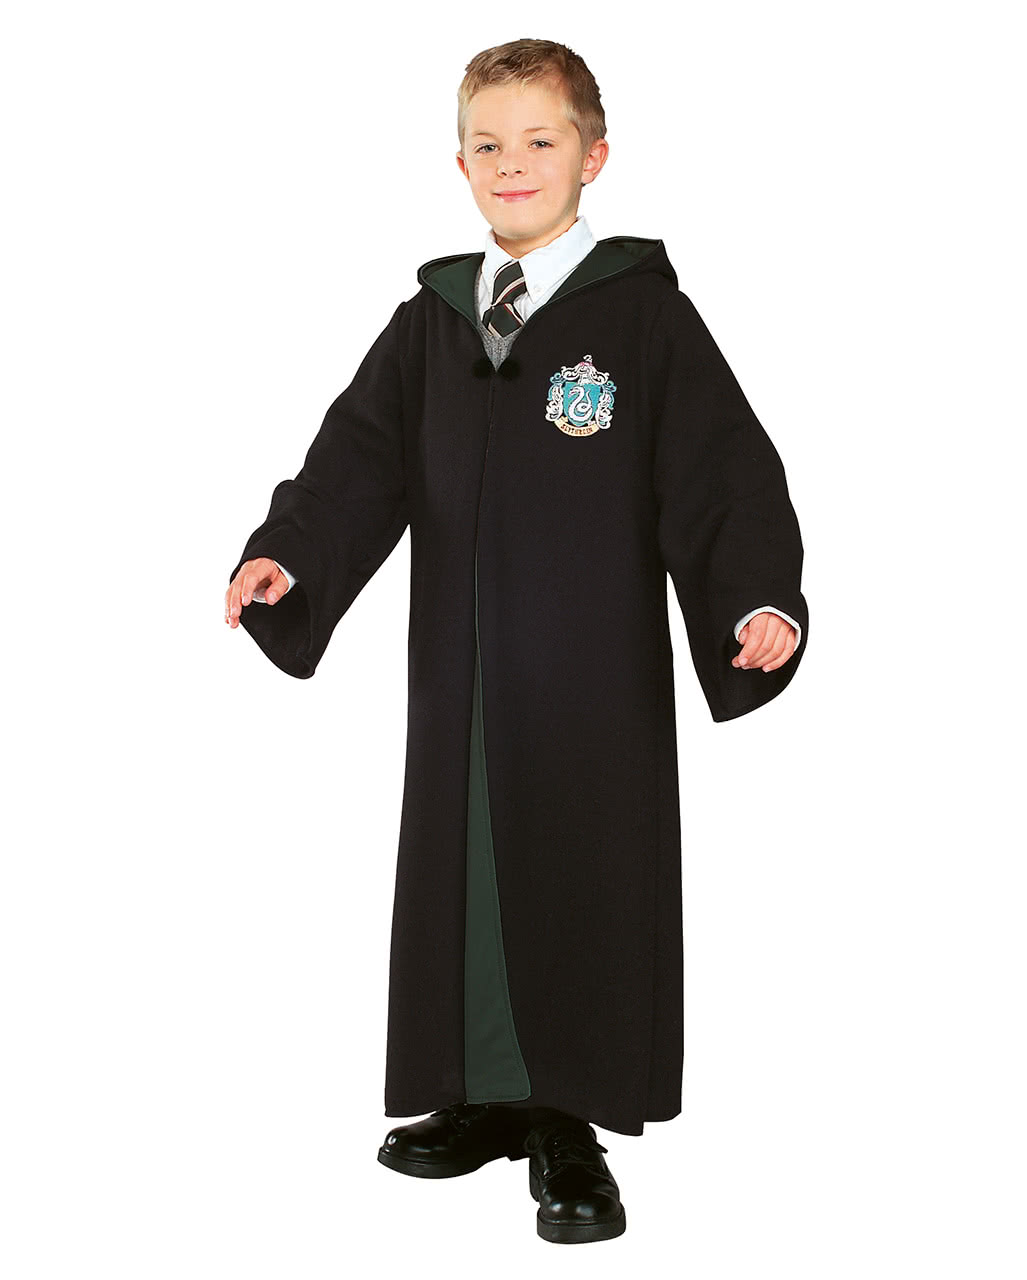 Draco Malfoy Costume Factory Online, Save 51% | jlcatj.gob.mx